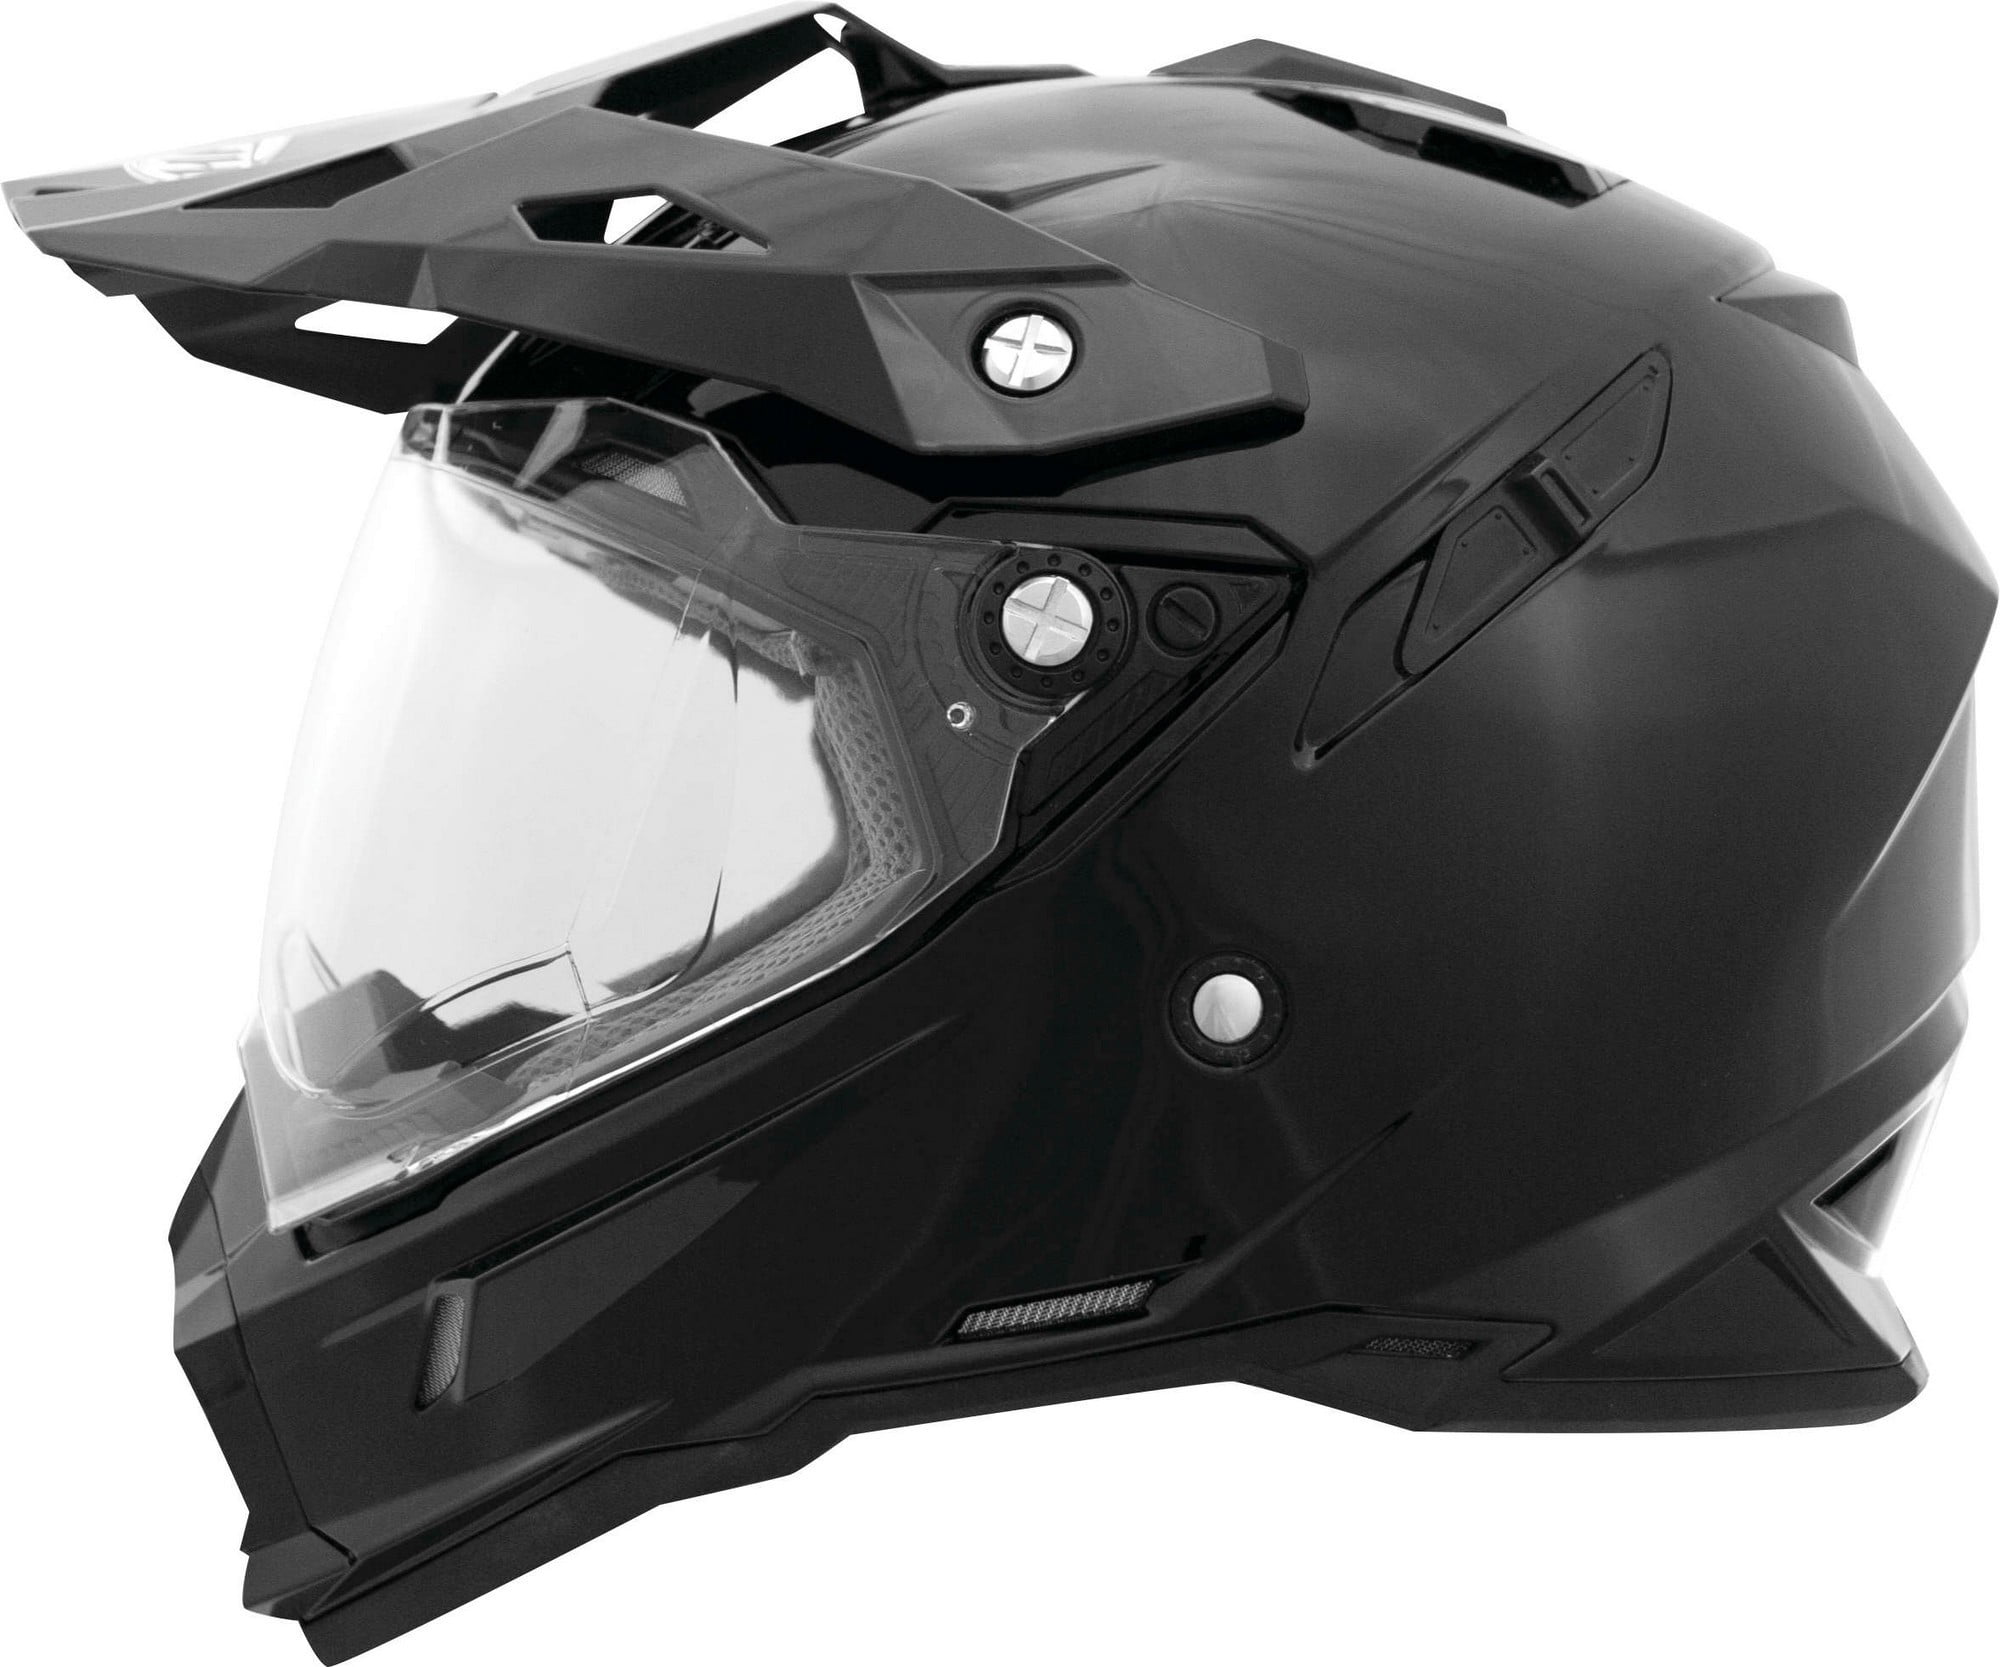 thh motocross helmet price